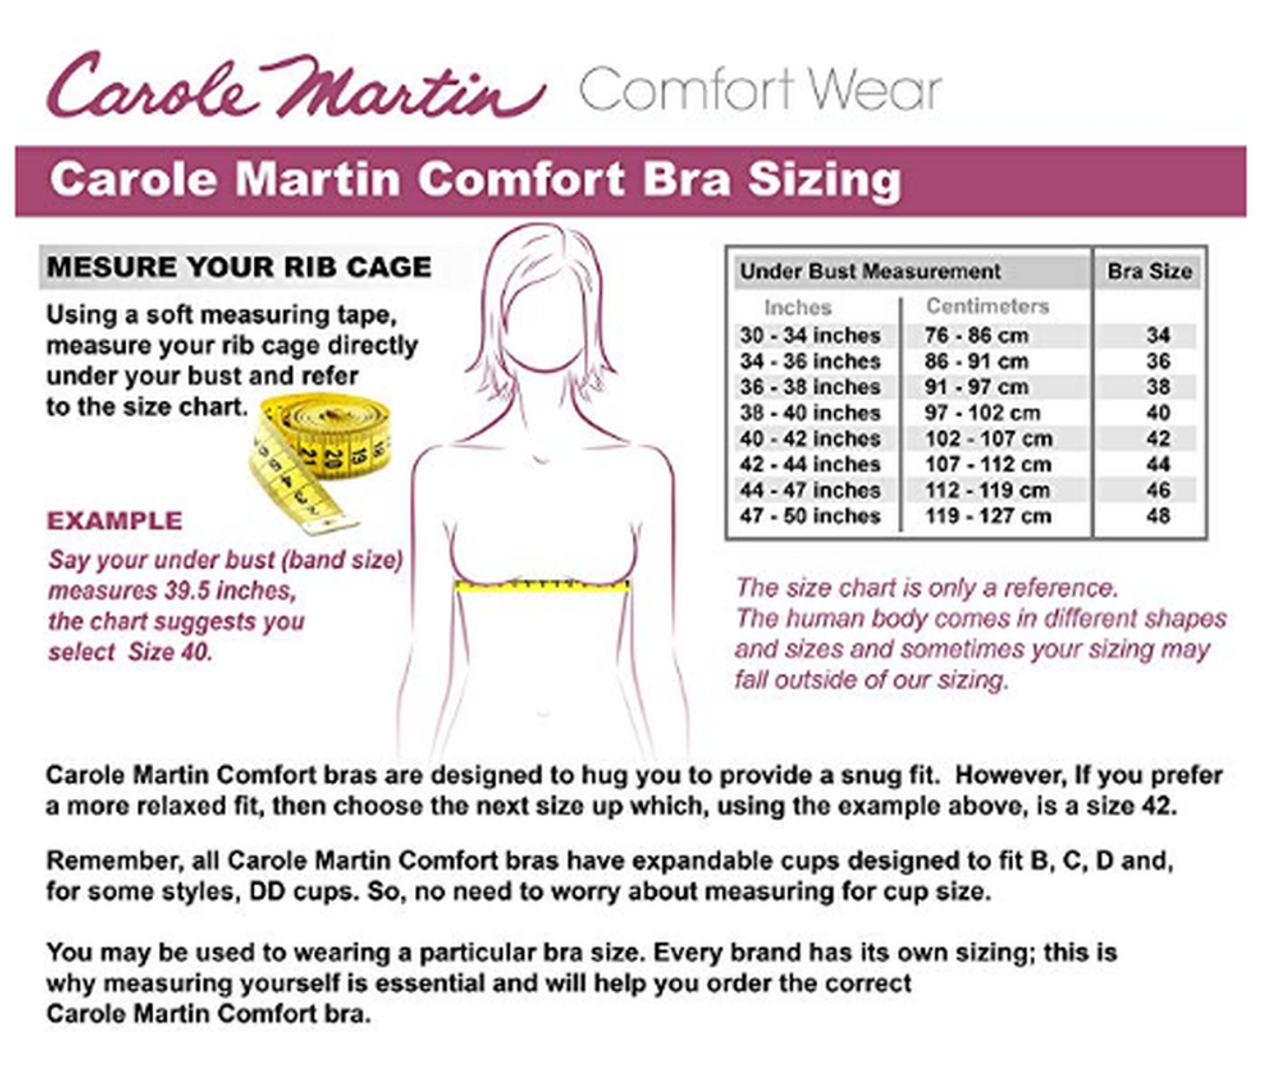 Full Freedom Comfort Bra, 1 unit, 36, Beige – Carole Martin